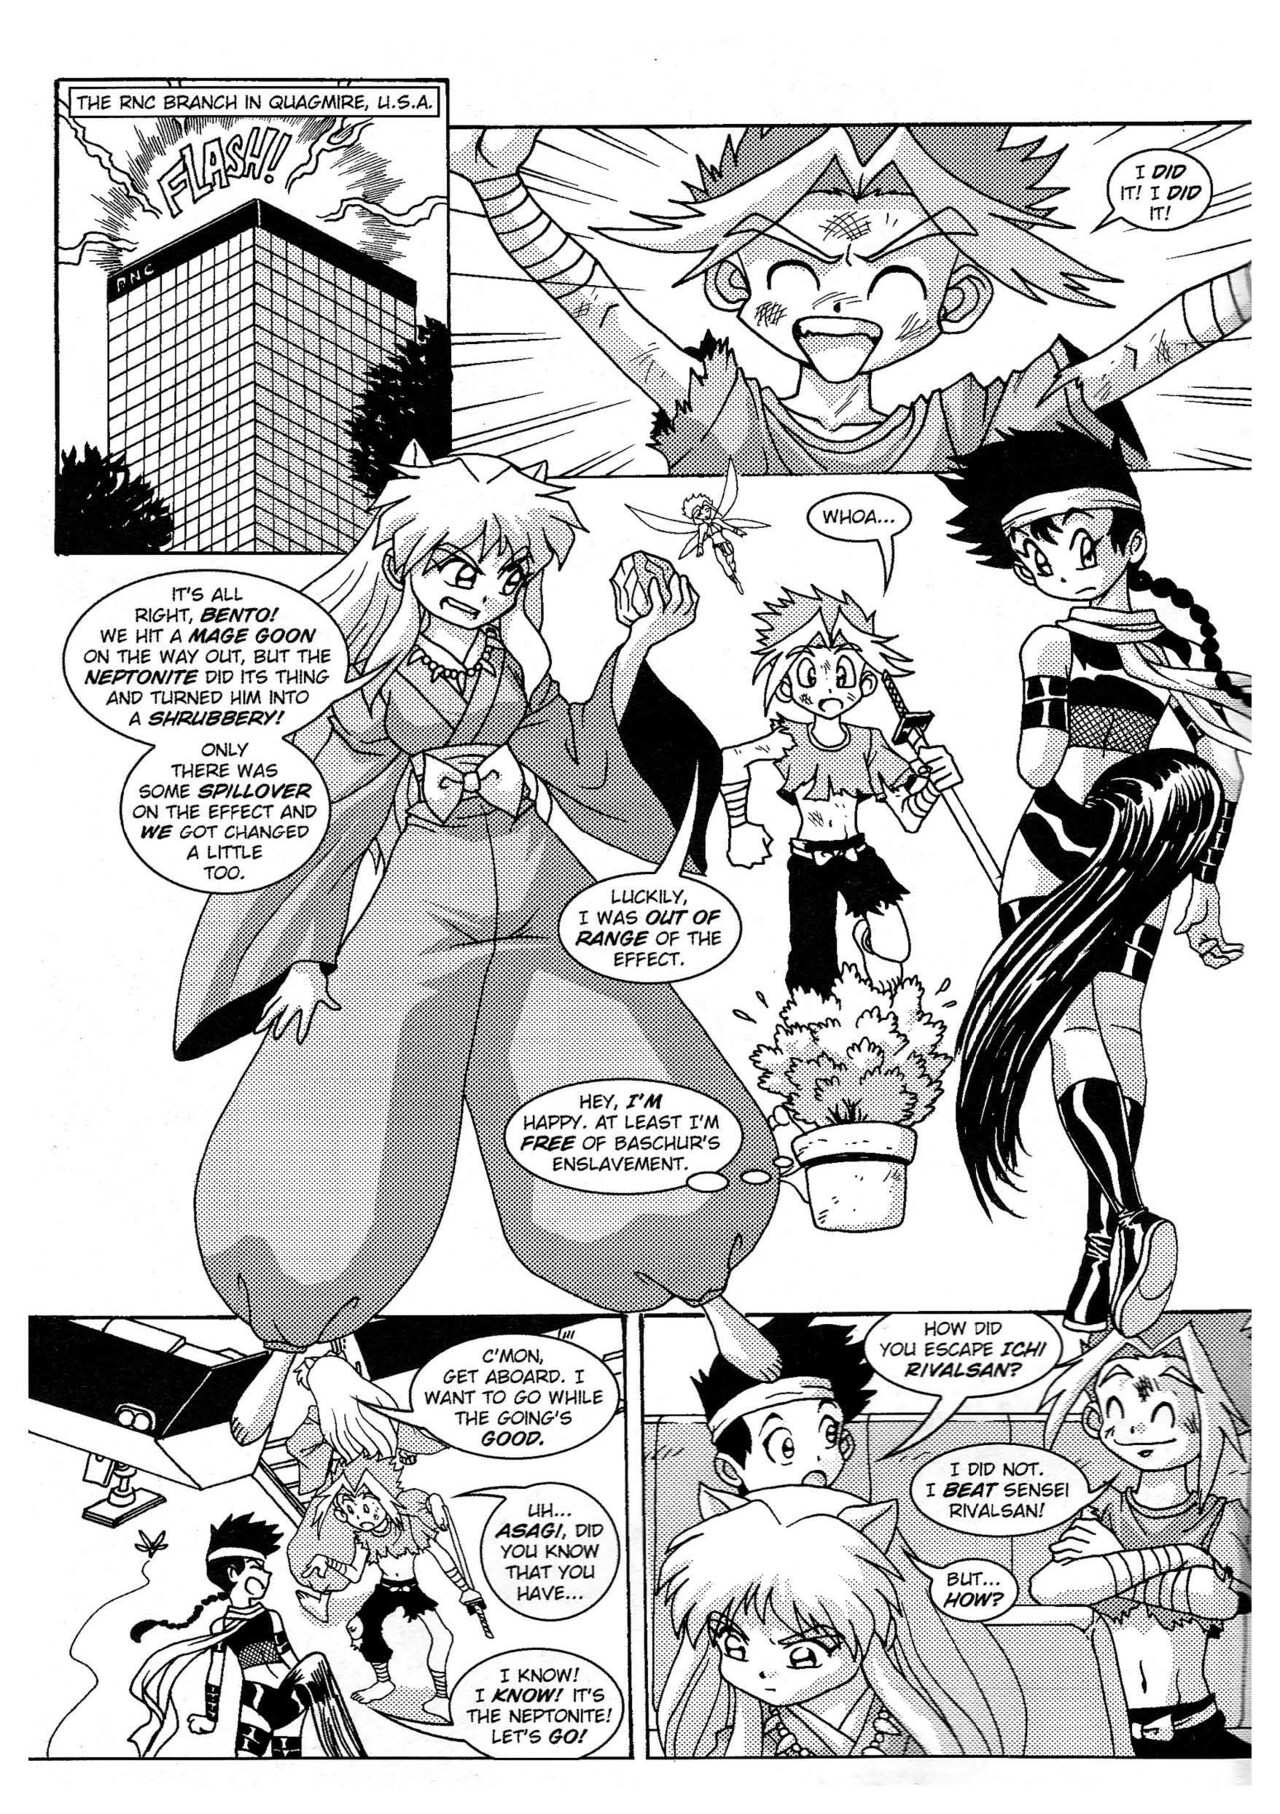 Read online Quagmire U.S.A. comic -  Issue #6 - 3